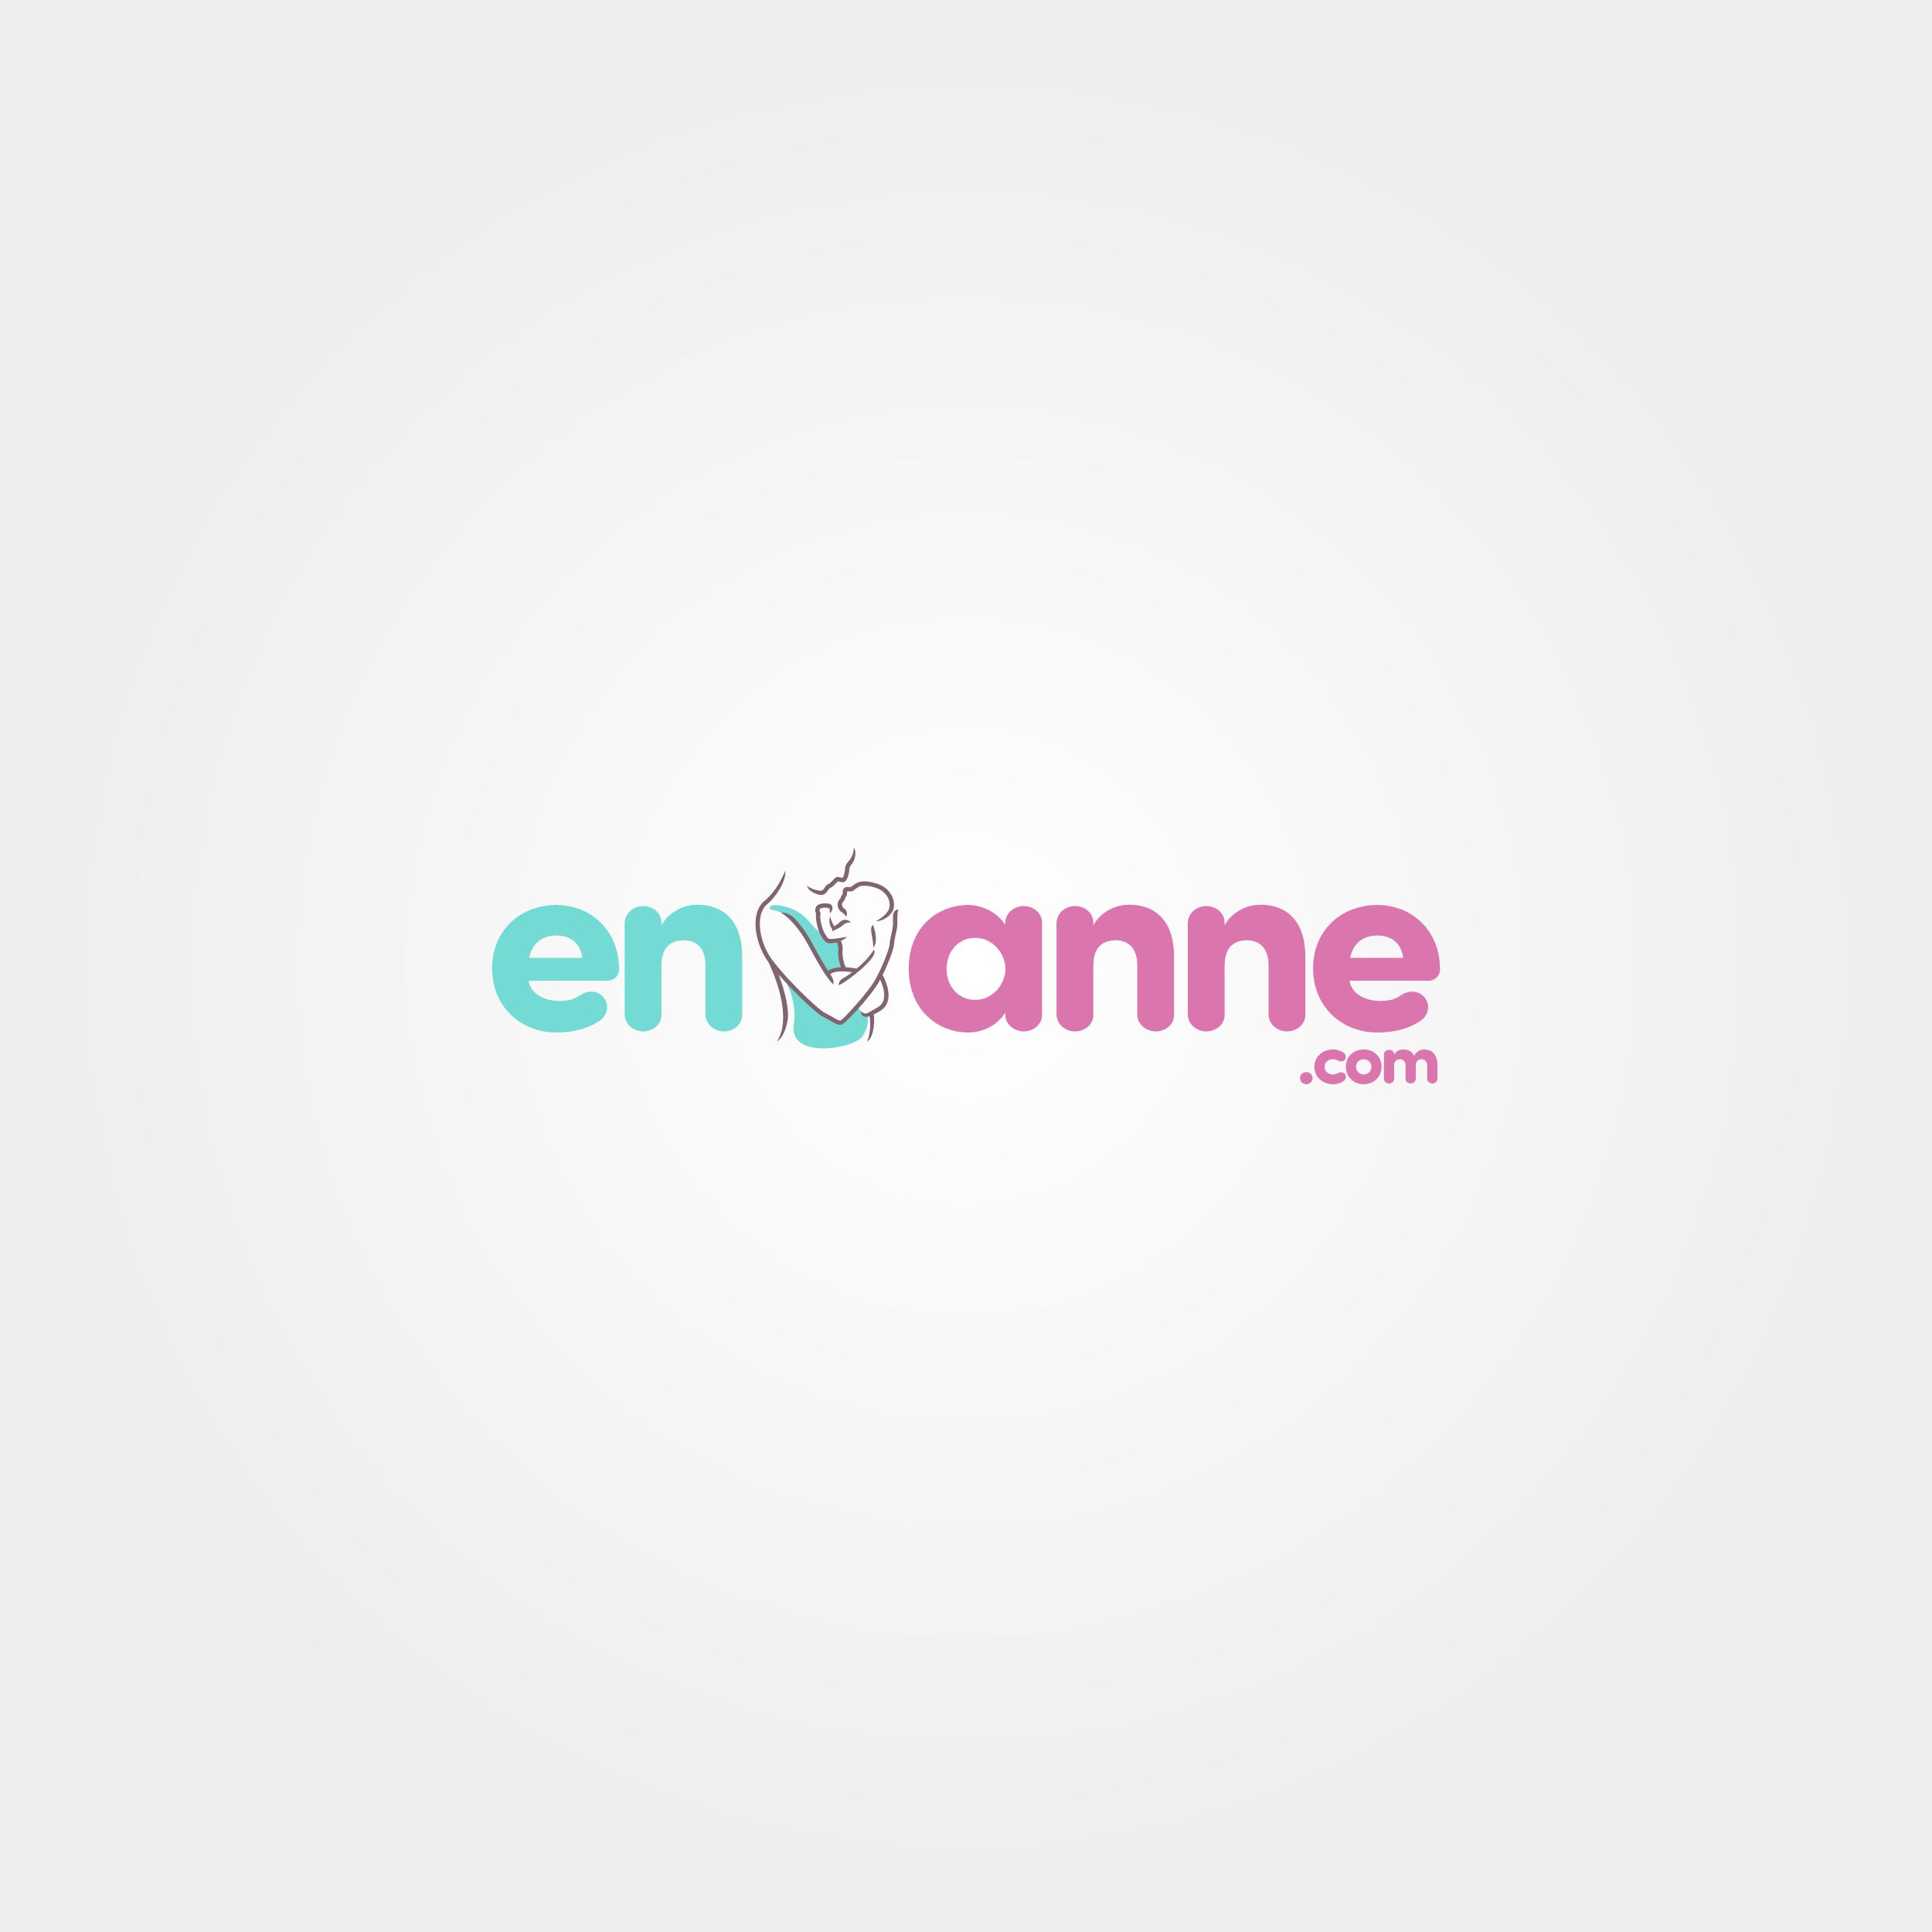 enanne